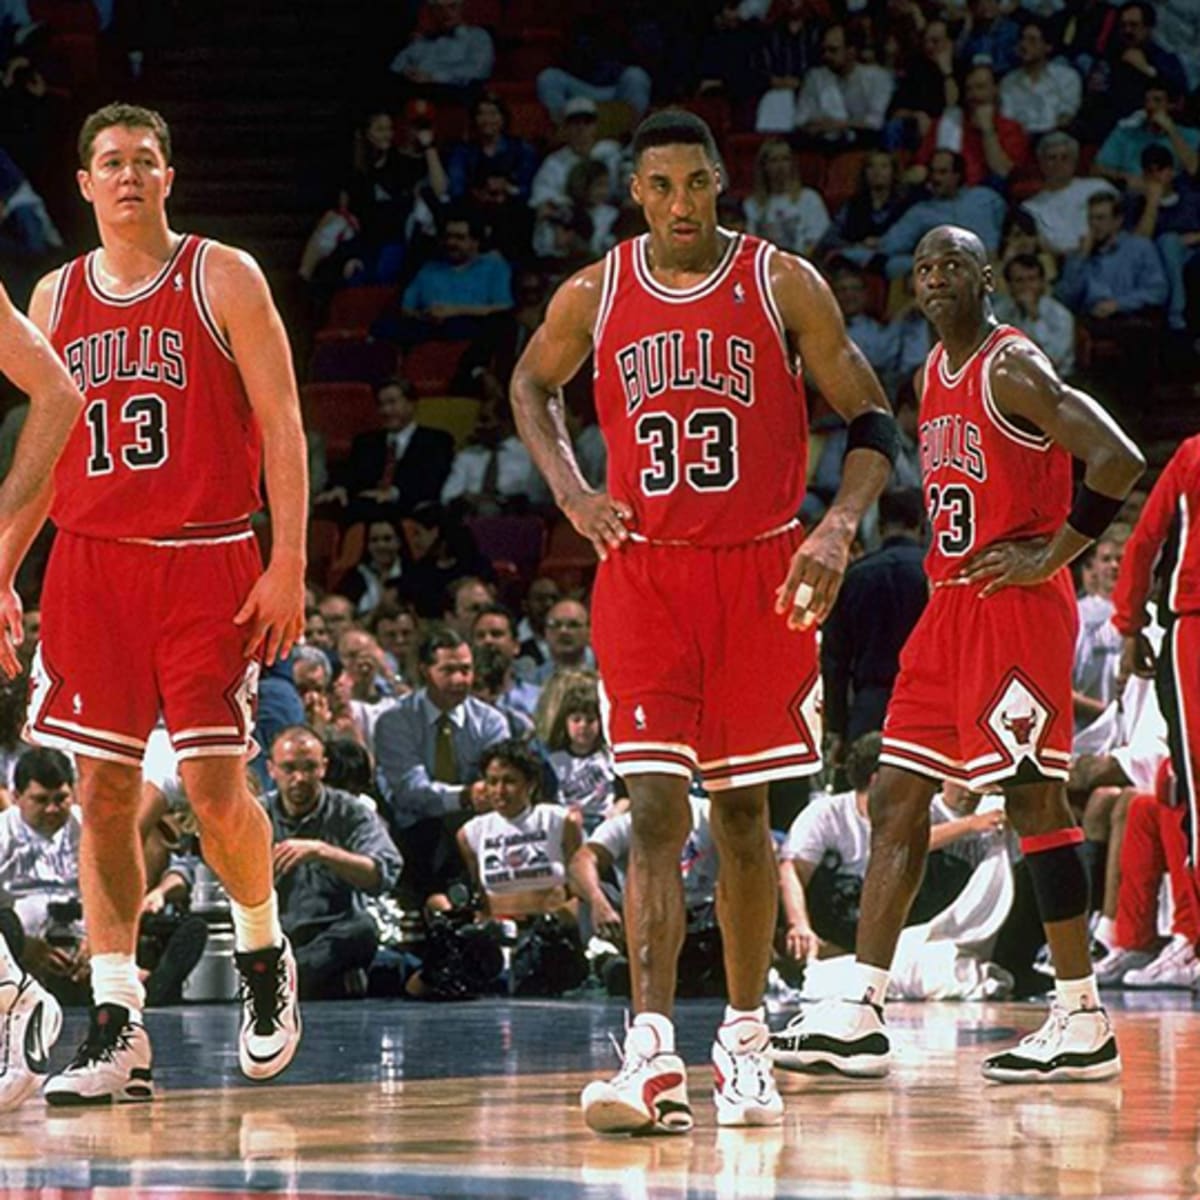 Dennis Rodman: Chicago Bulls forward rules over NBA rebounders - Sports  Illustrated Vault